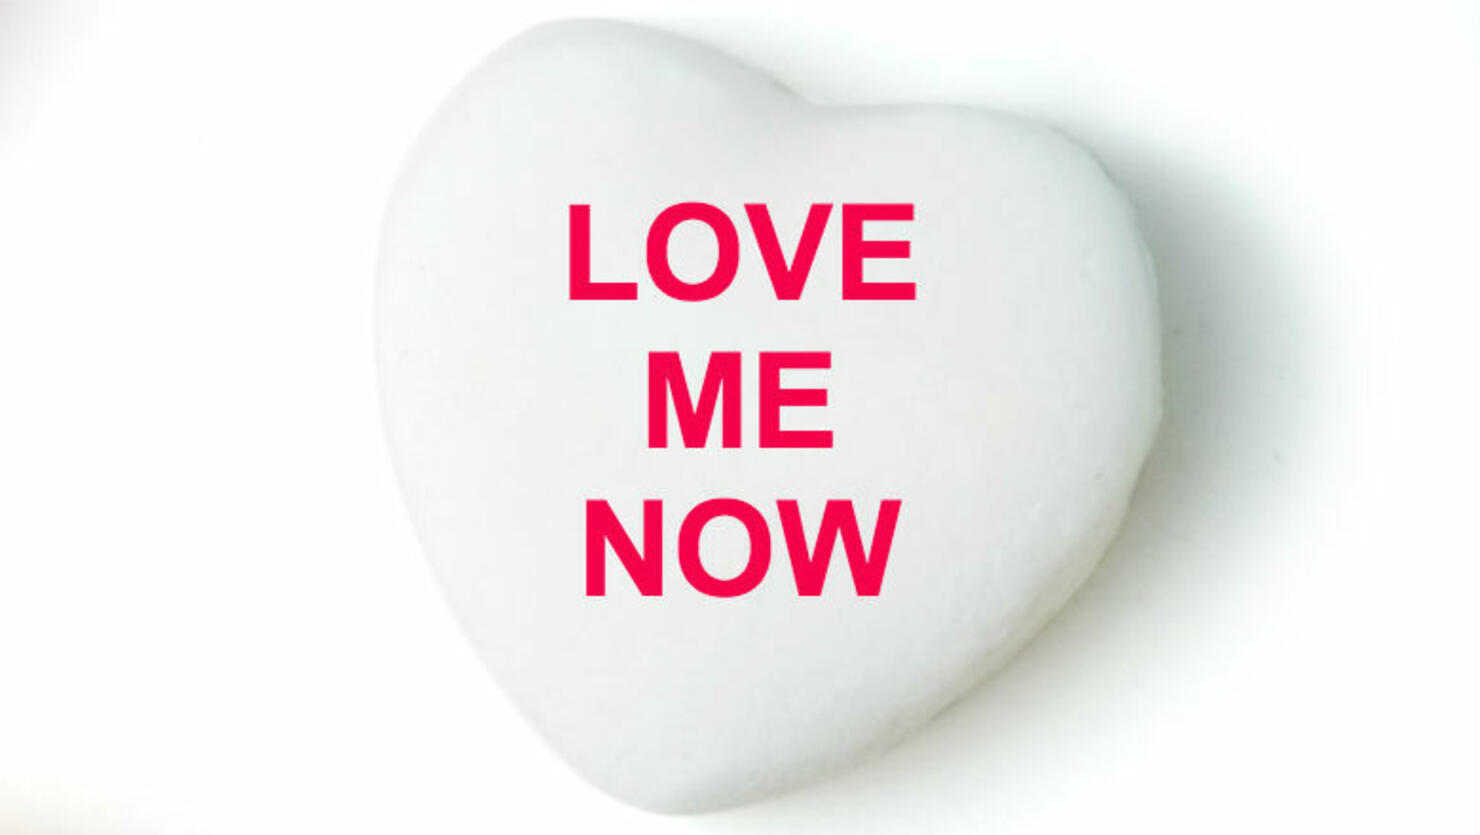 John Legend - "Love Me Now"